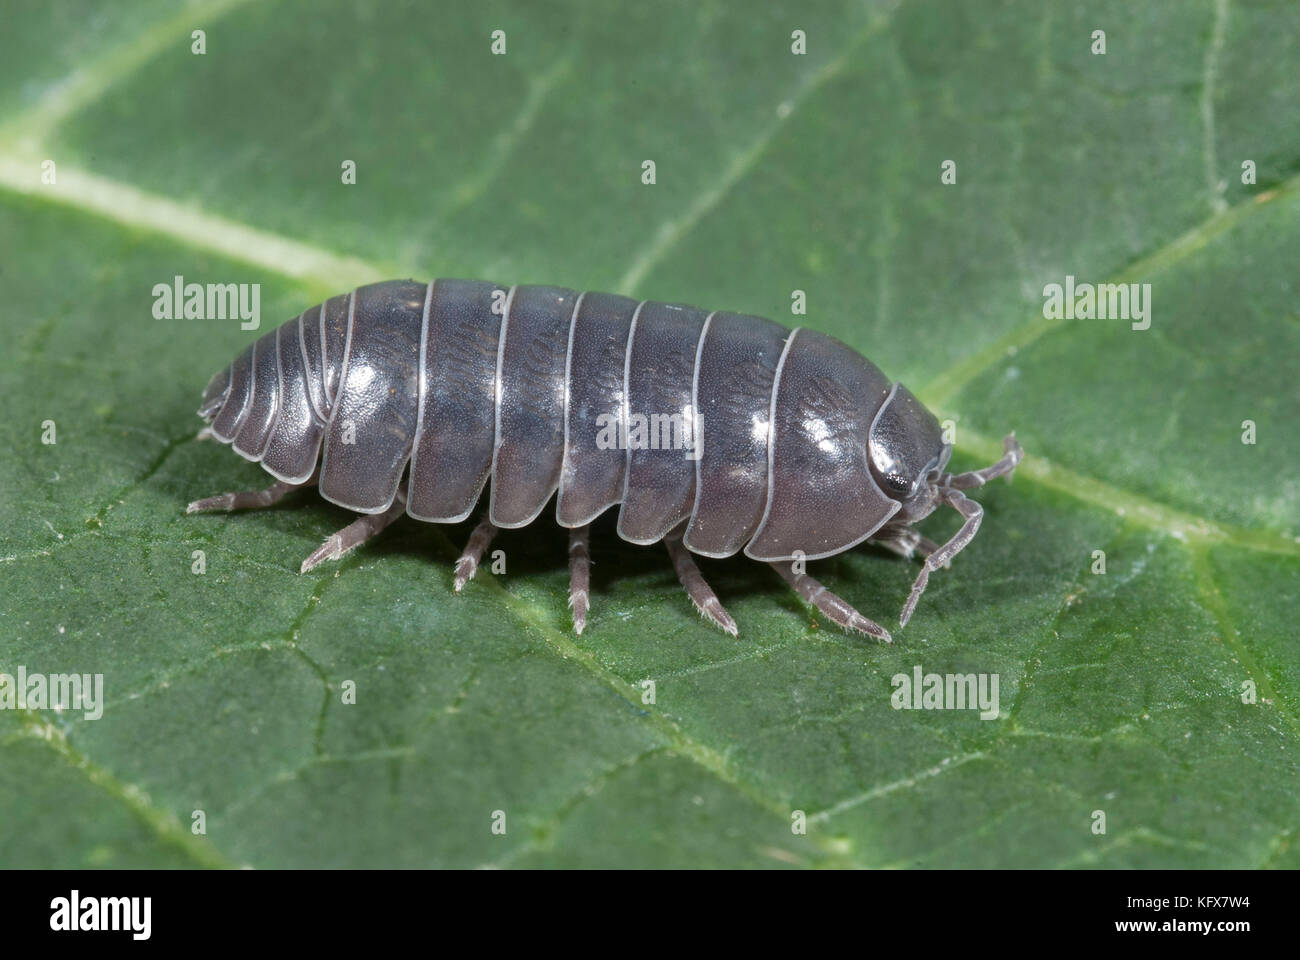 Pill Woodlice or pillbug, Armadillidium vulgare, on leaf in garden, segmented body, legs, Stock Photo